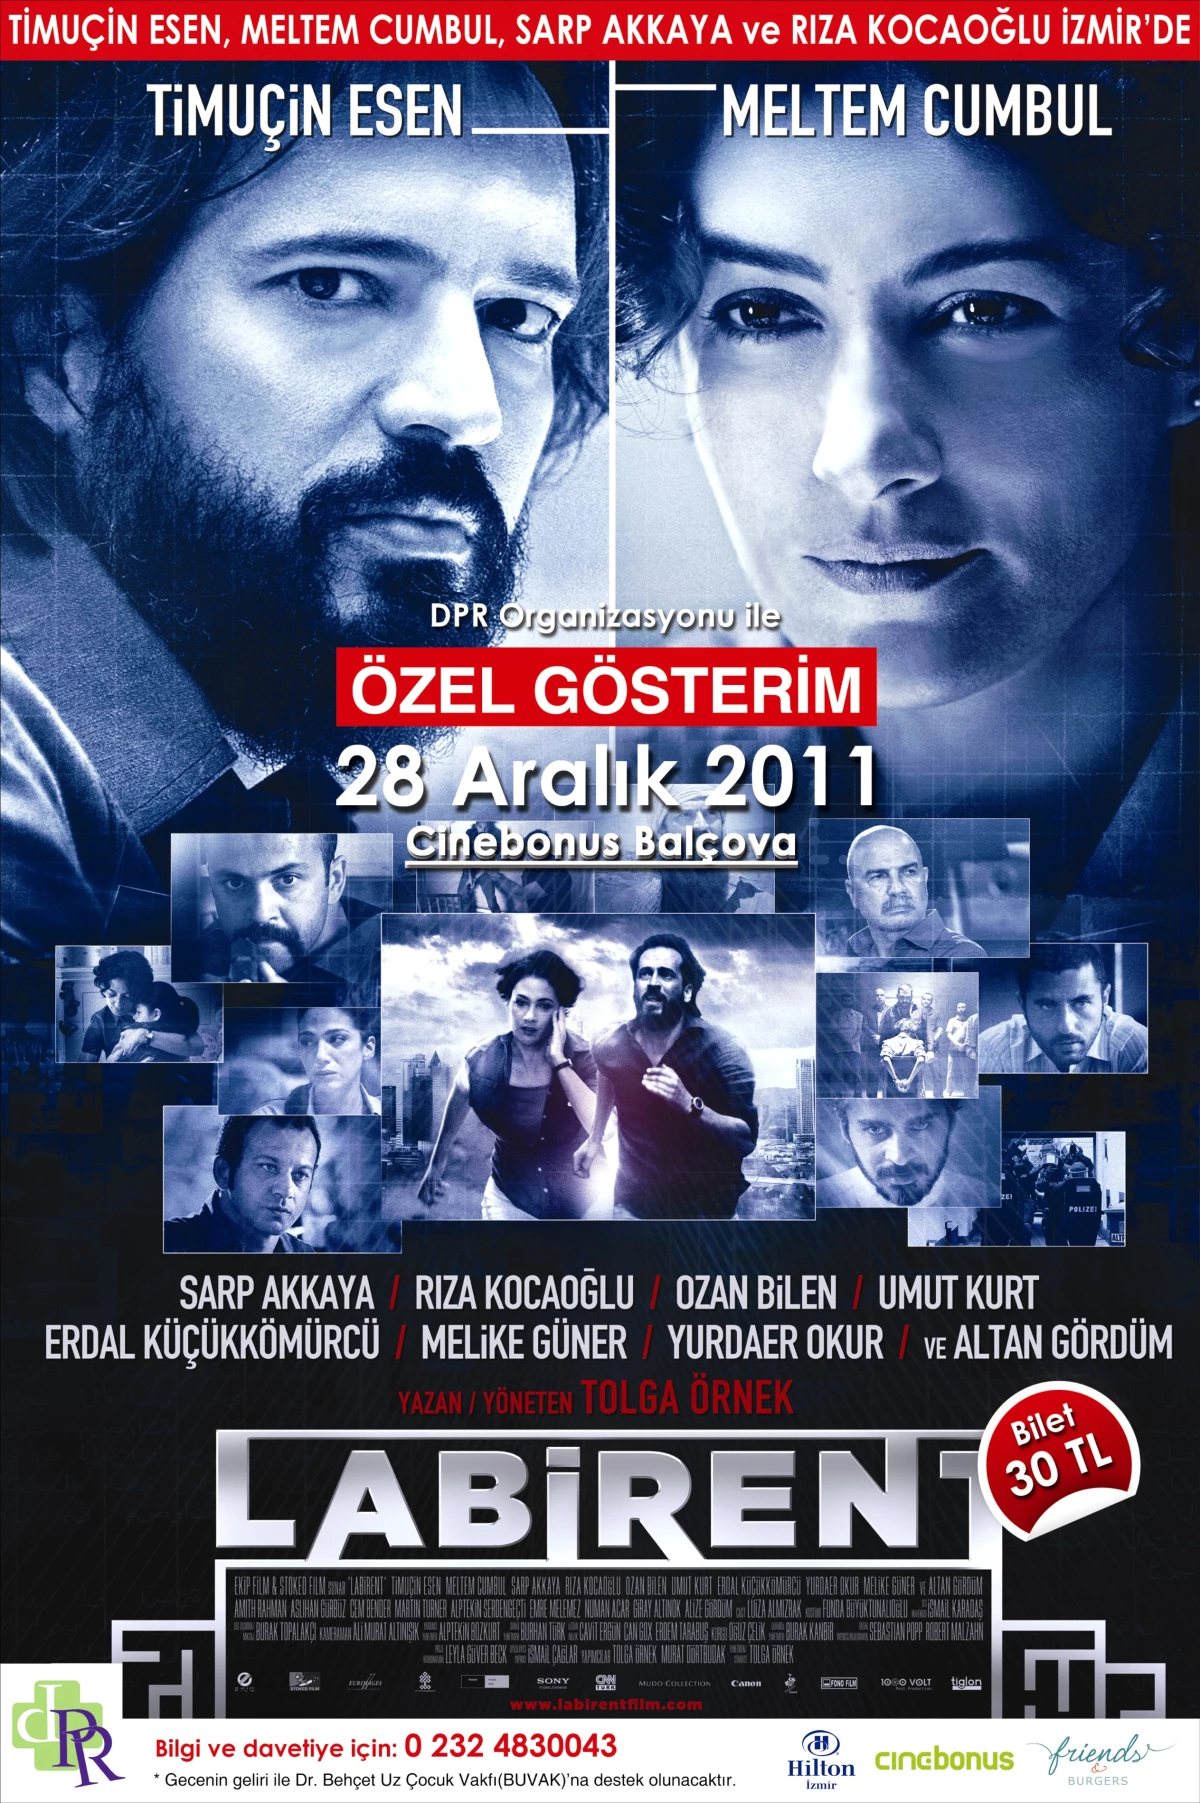 Labirent Filmi, İzmir\'de